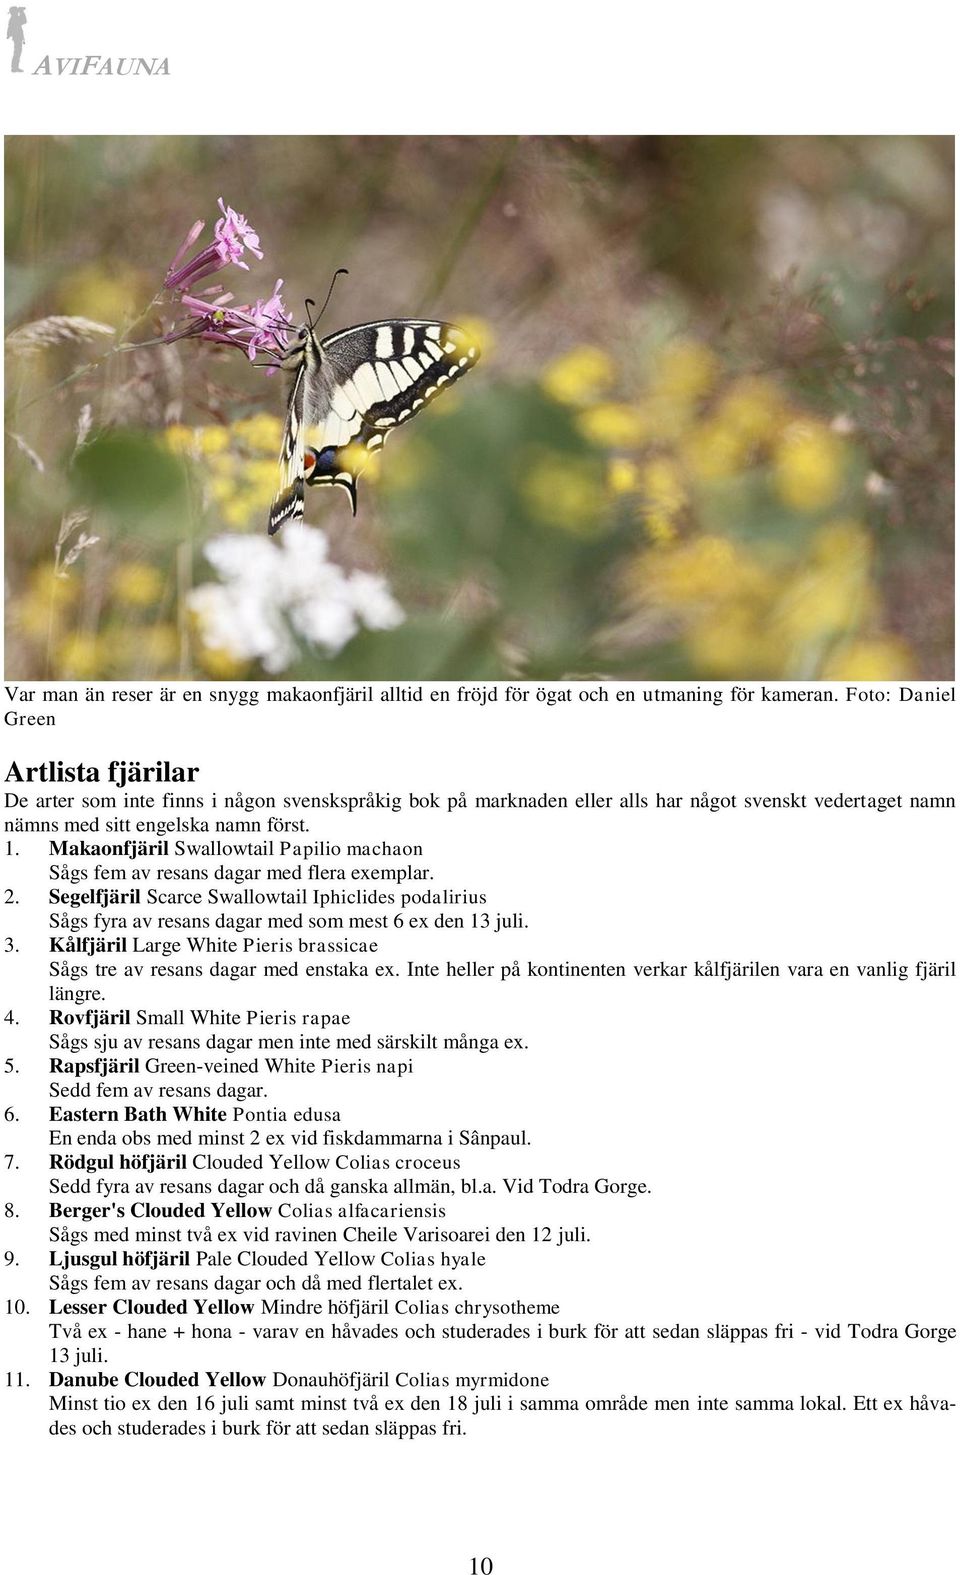 Makaonfjäril Swallowtail Papilio machaon Sågs fem av resans dagar med flera exemplar. 2. Segelfjäril Scarce Swallowtail Iphiclides podalirius Sågs fyra av resans dagar med som mest 6 ex den 13 juli.